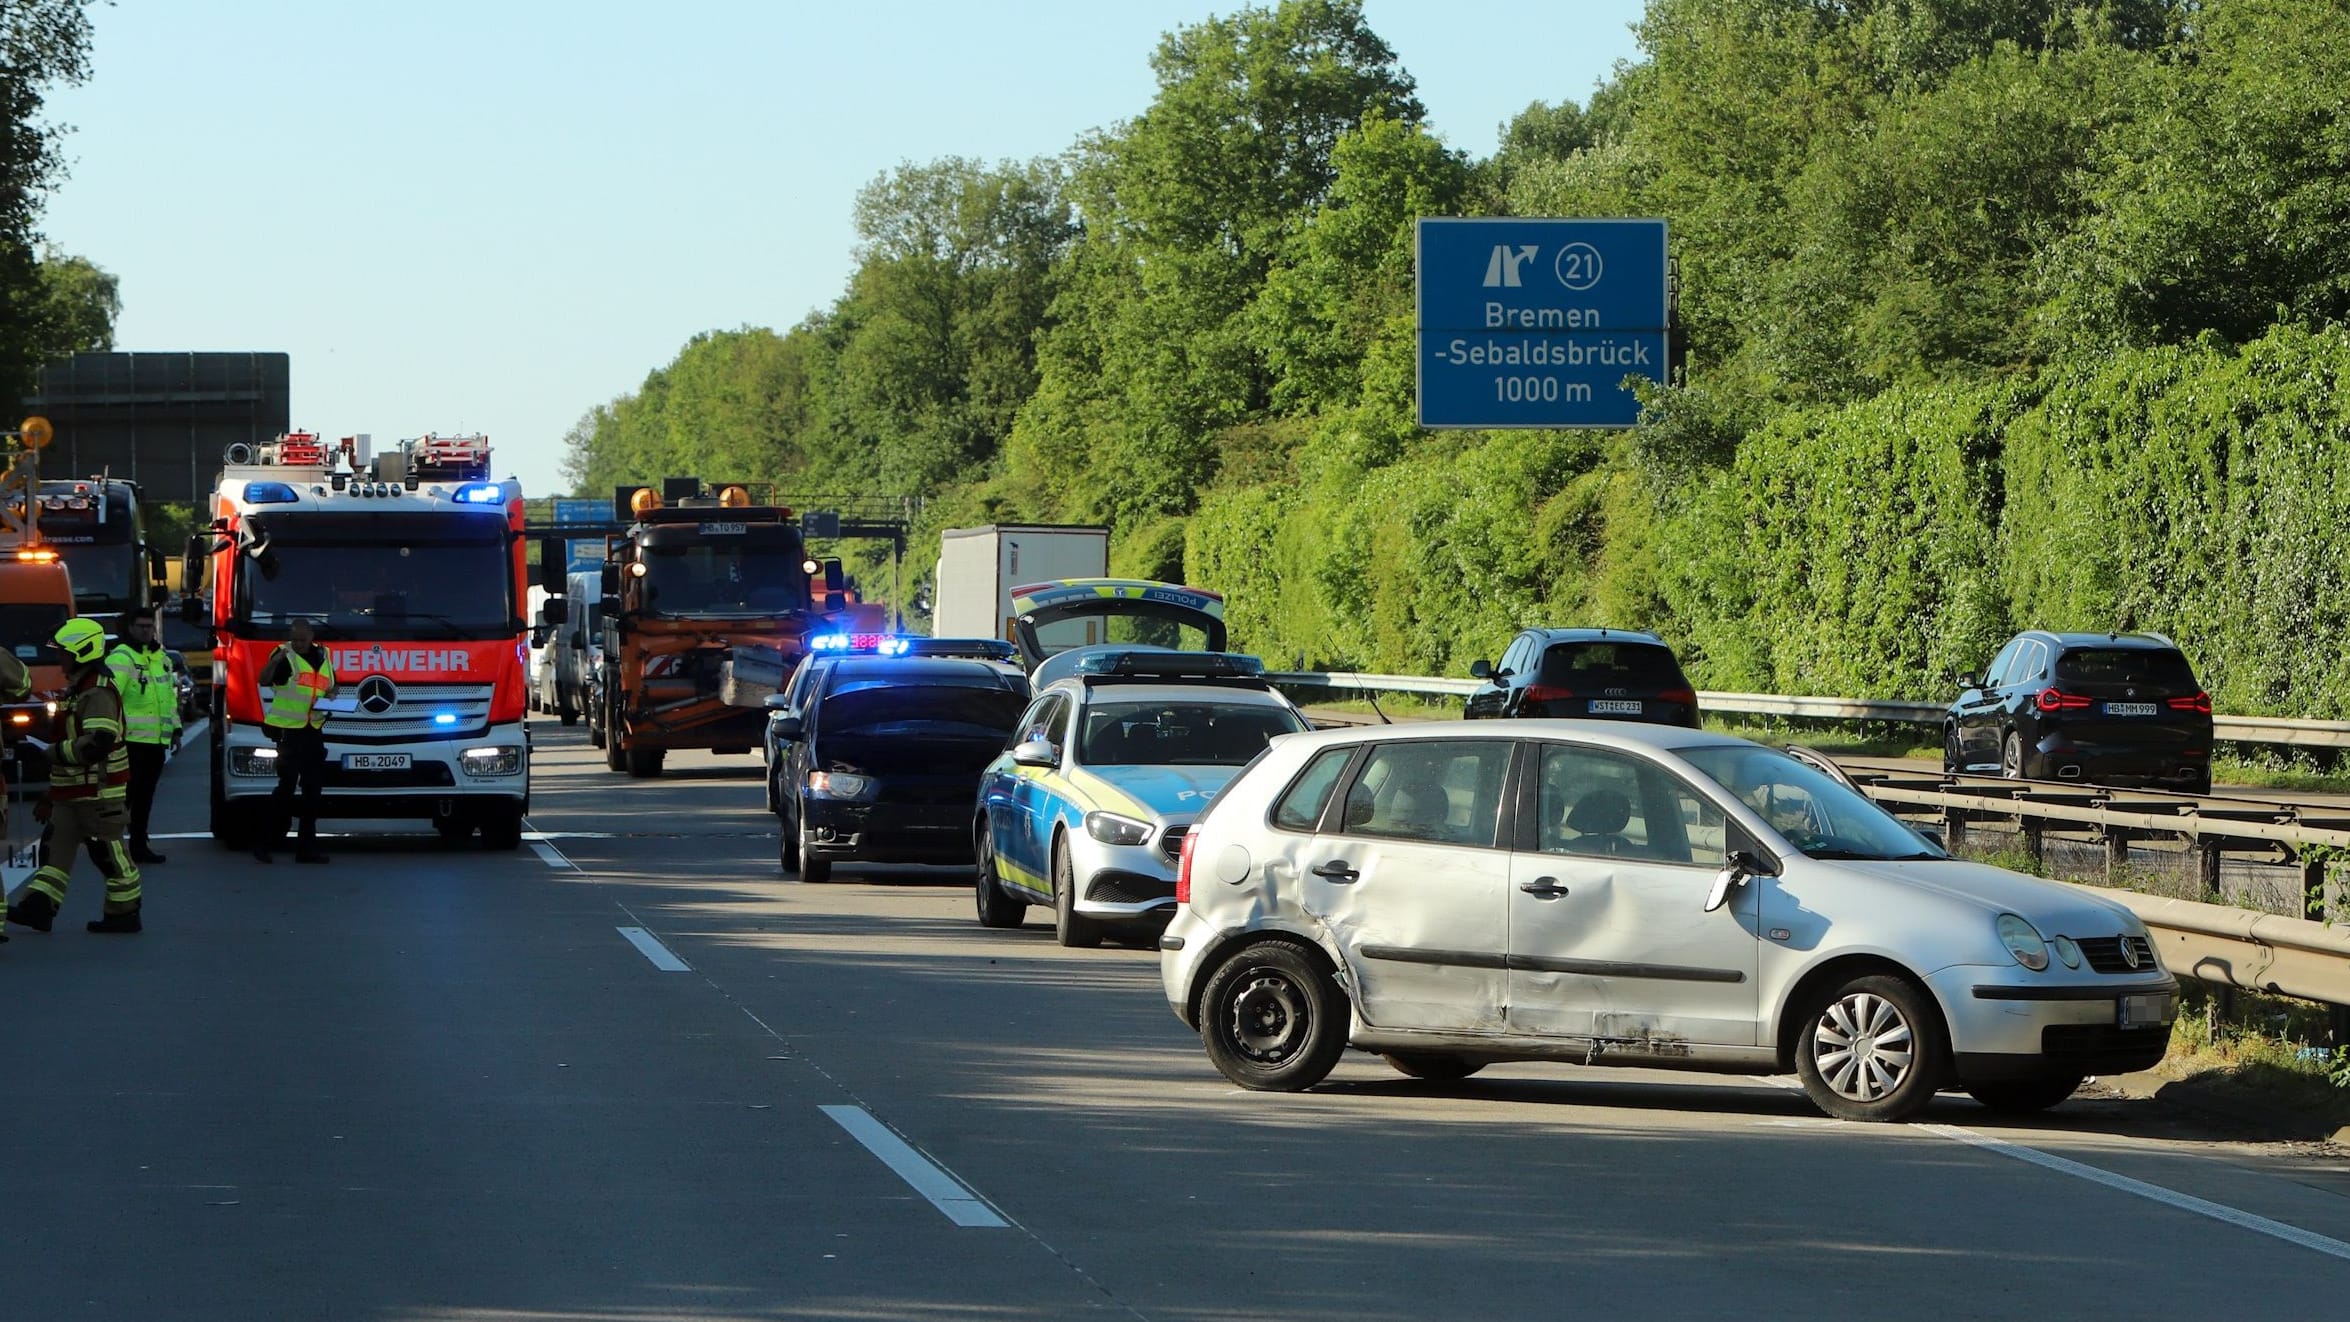 A27 bei Bremen: Schwerer Unfall – Strecke zeitweise voll gesperrt